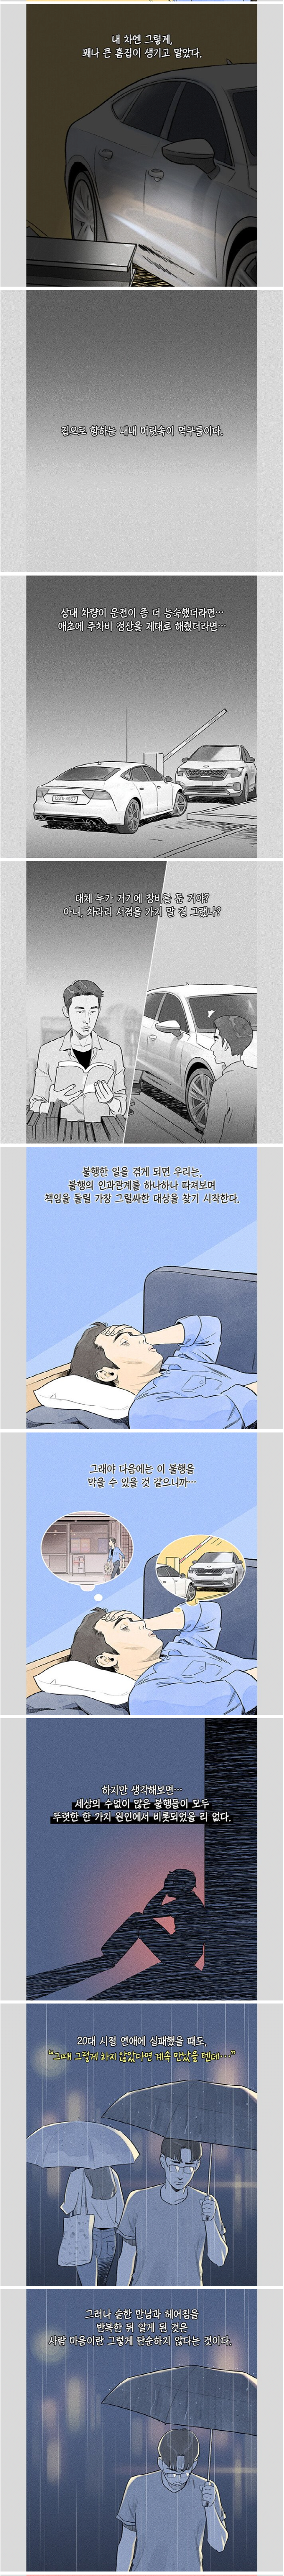 nokbeon.net-허지웅이 겪은 일화로 보는 불행의 인과관계-2번 이미지